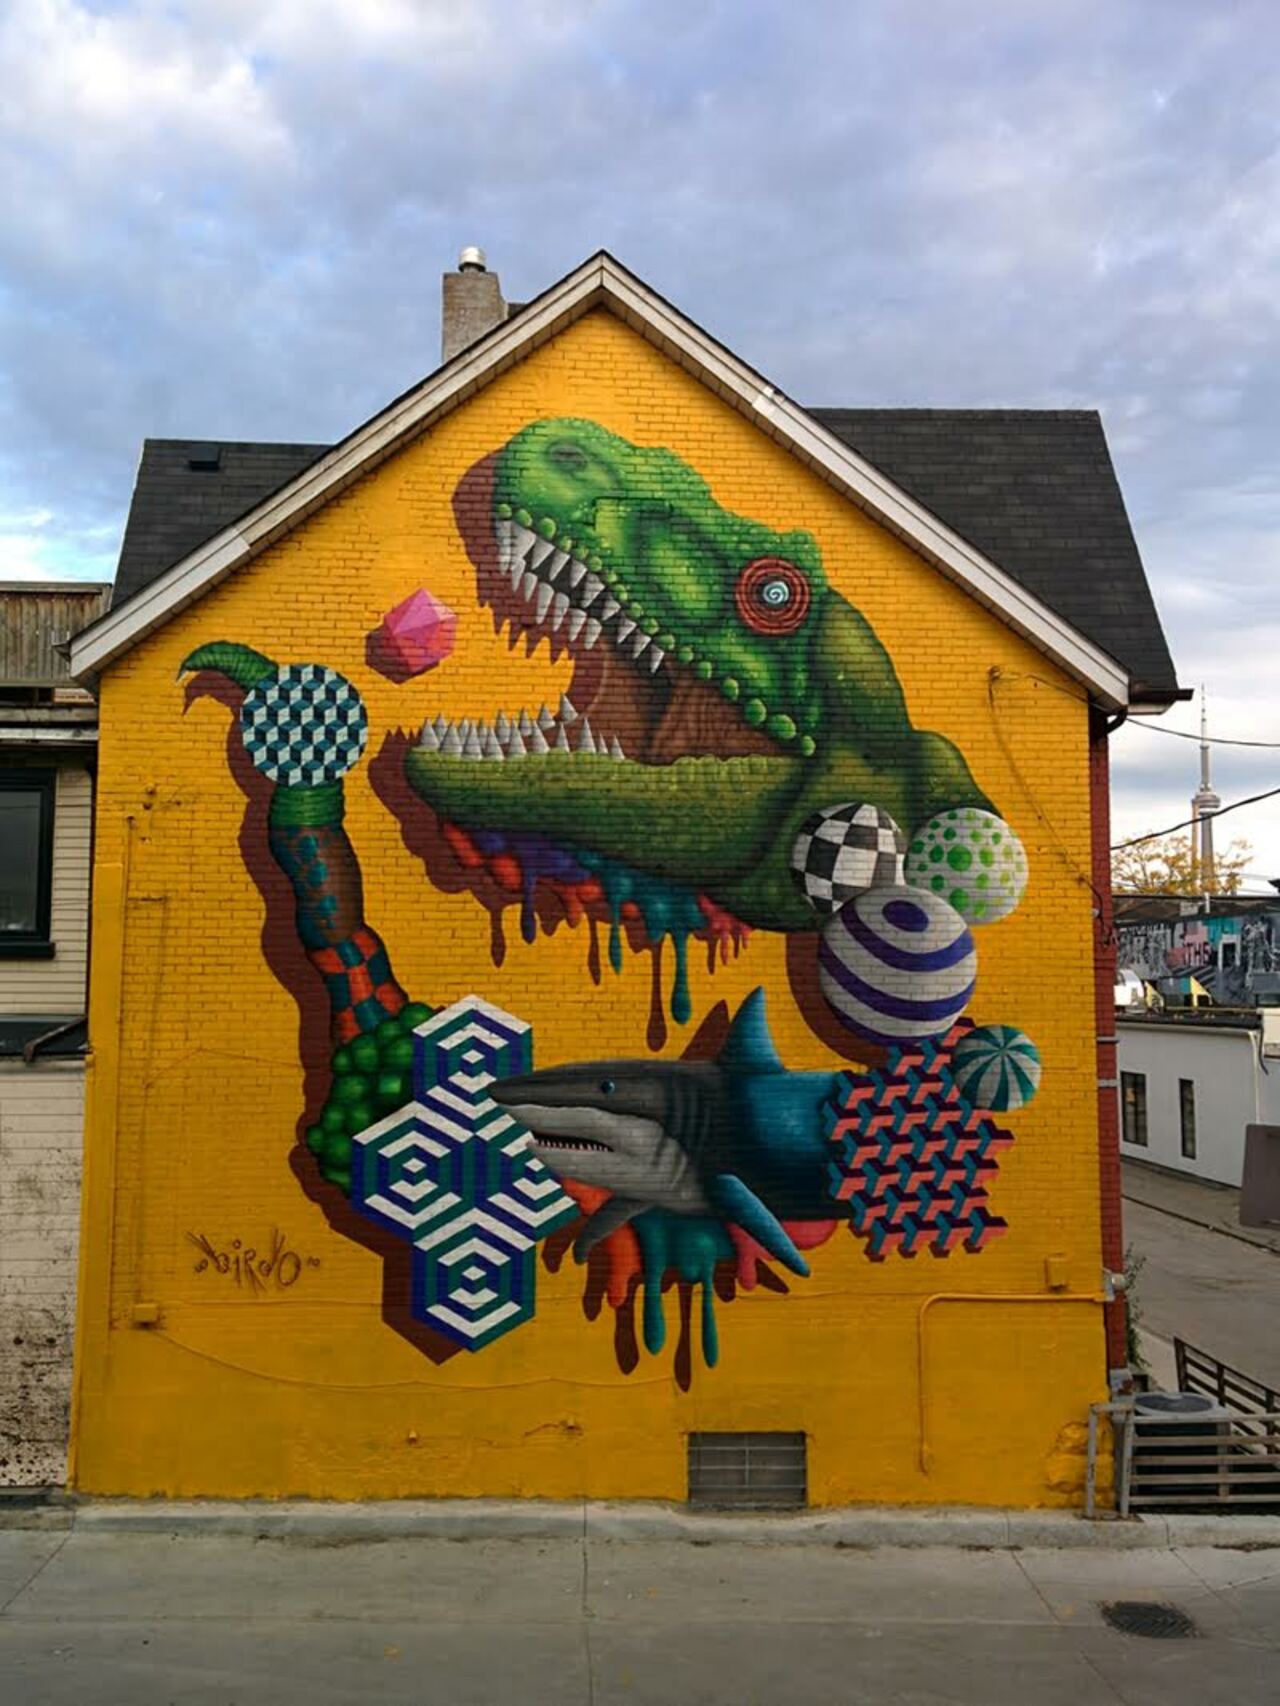 “TorontoSharkus-Rex” #mural by #birdO in #Toronto  #streetart #graffiti #jerryrugg http://t.co/wGAV1mX5hY